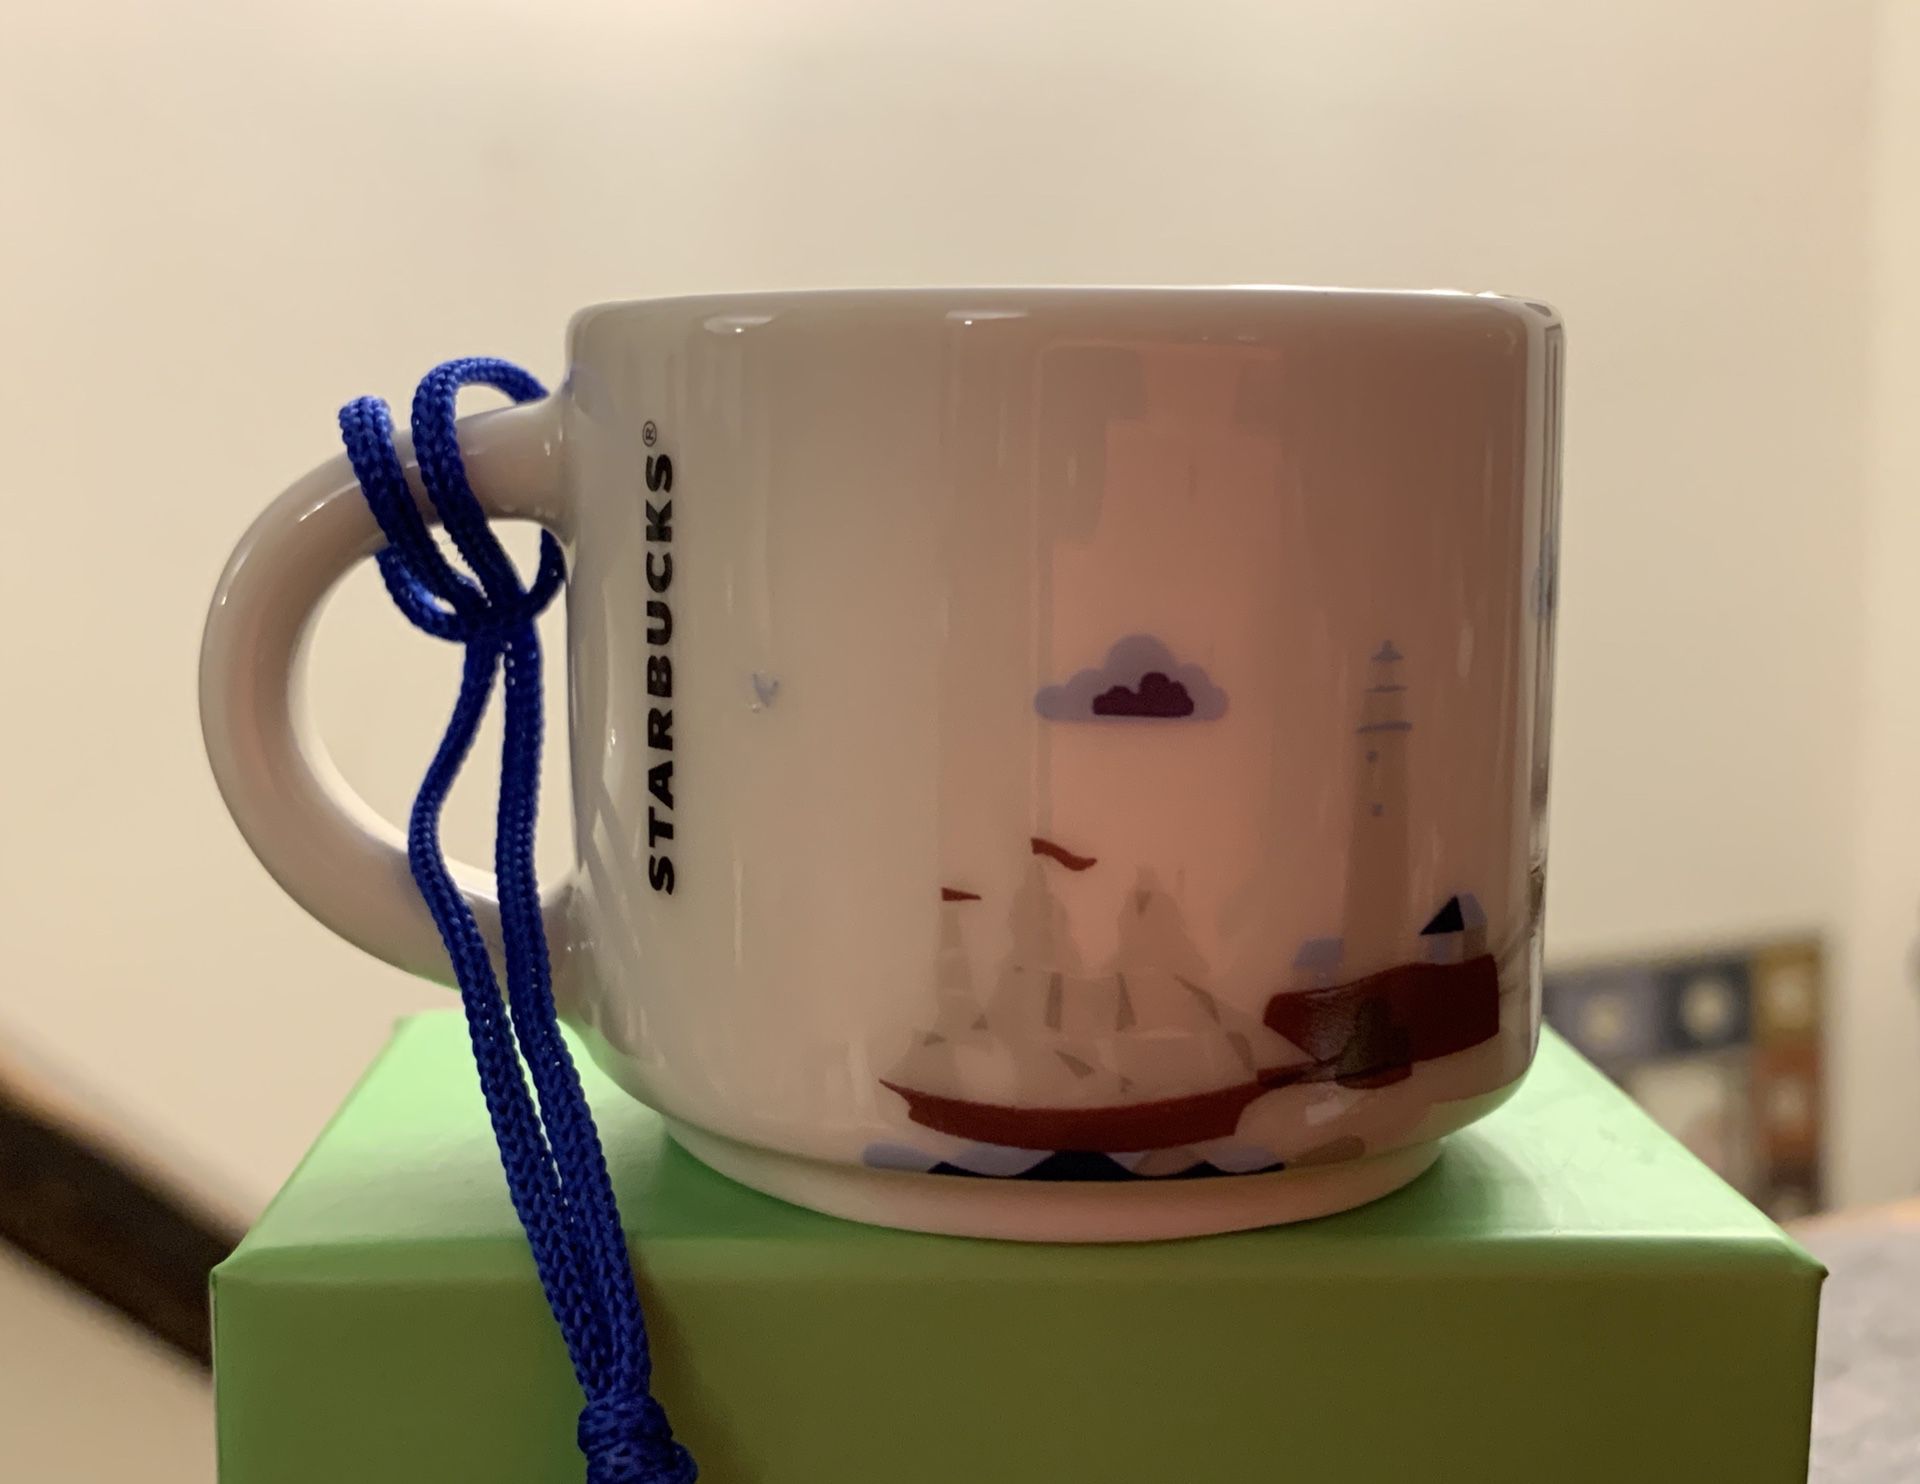 Starbucks BOSTON 2017 "You Are Here Collection" 2fl.oz. Ornament Coffee Mug Cup